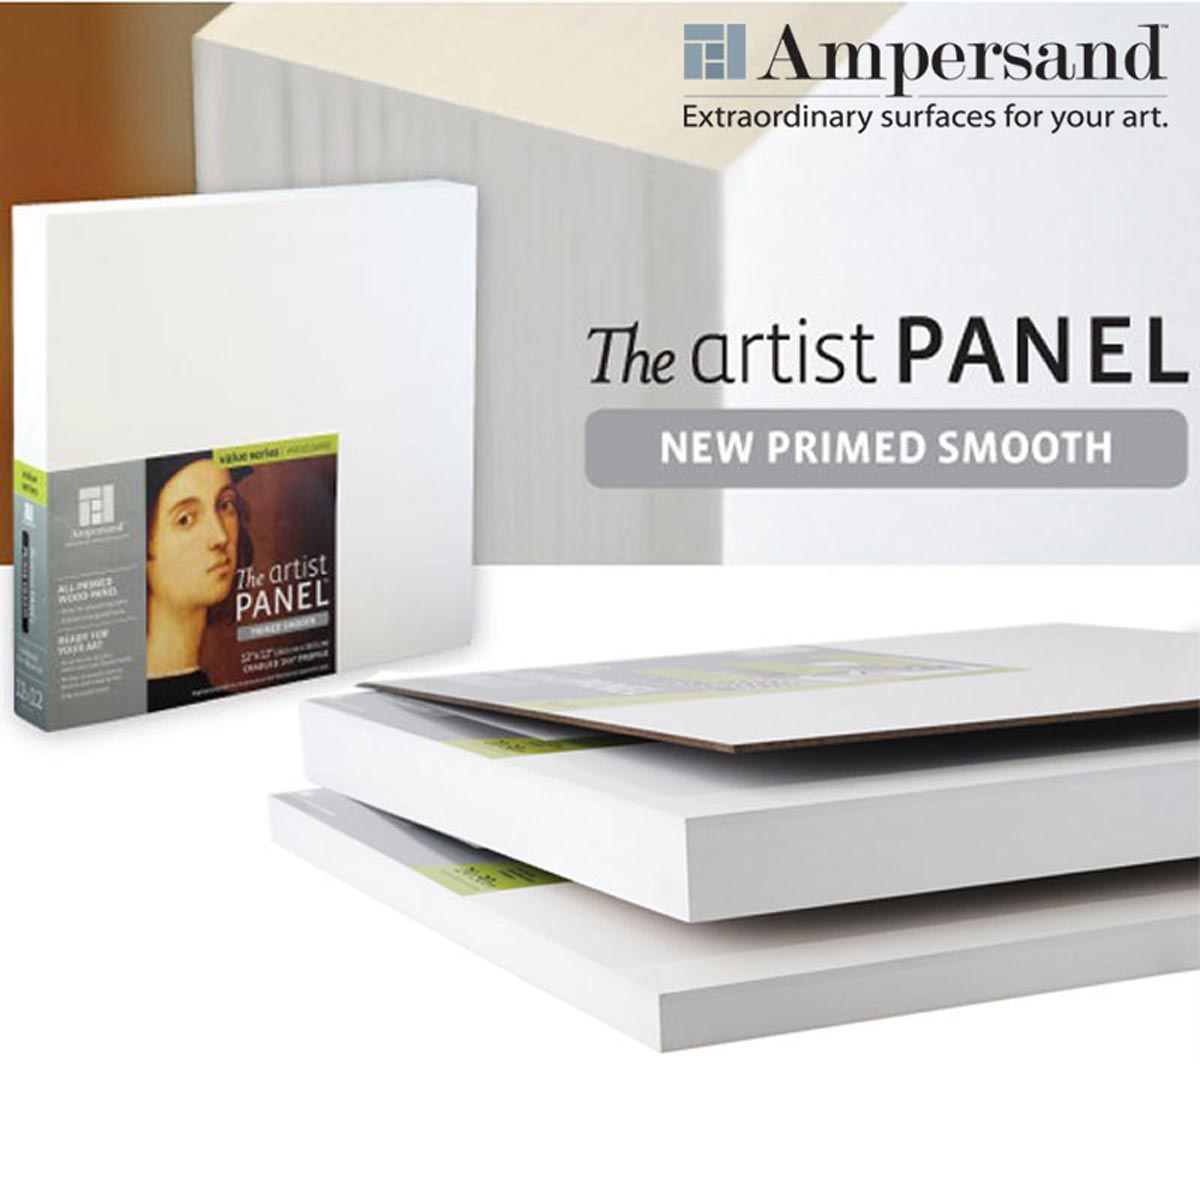 Ampersand Value Series Primed Smooth Artist Panels